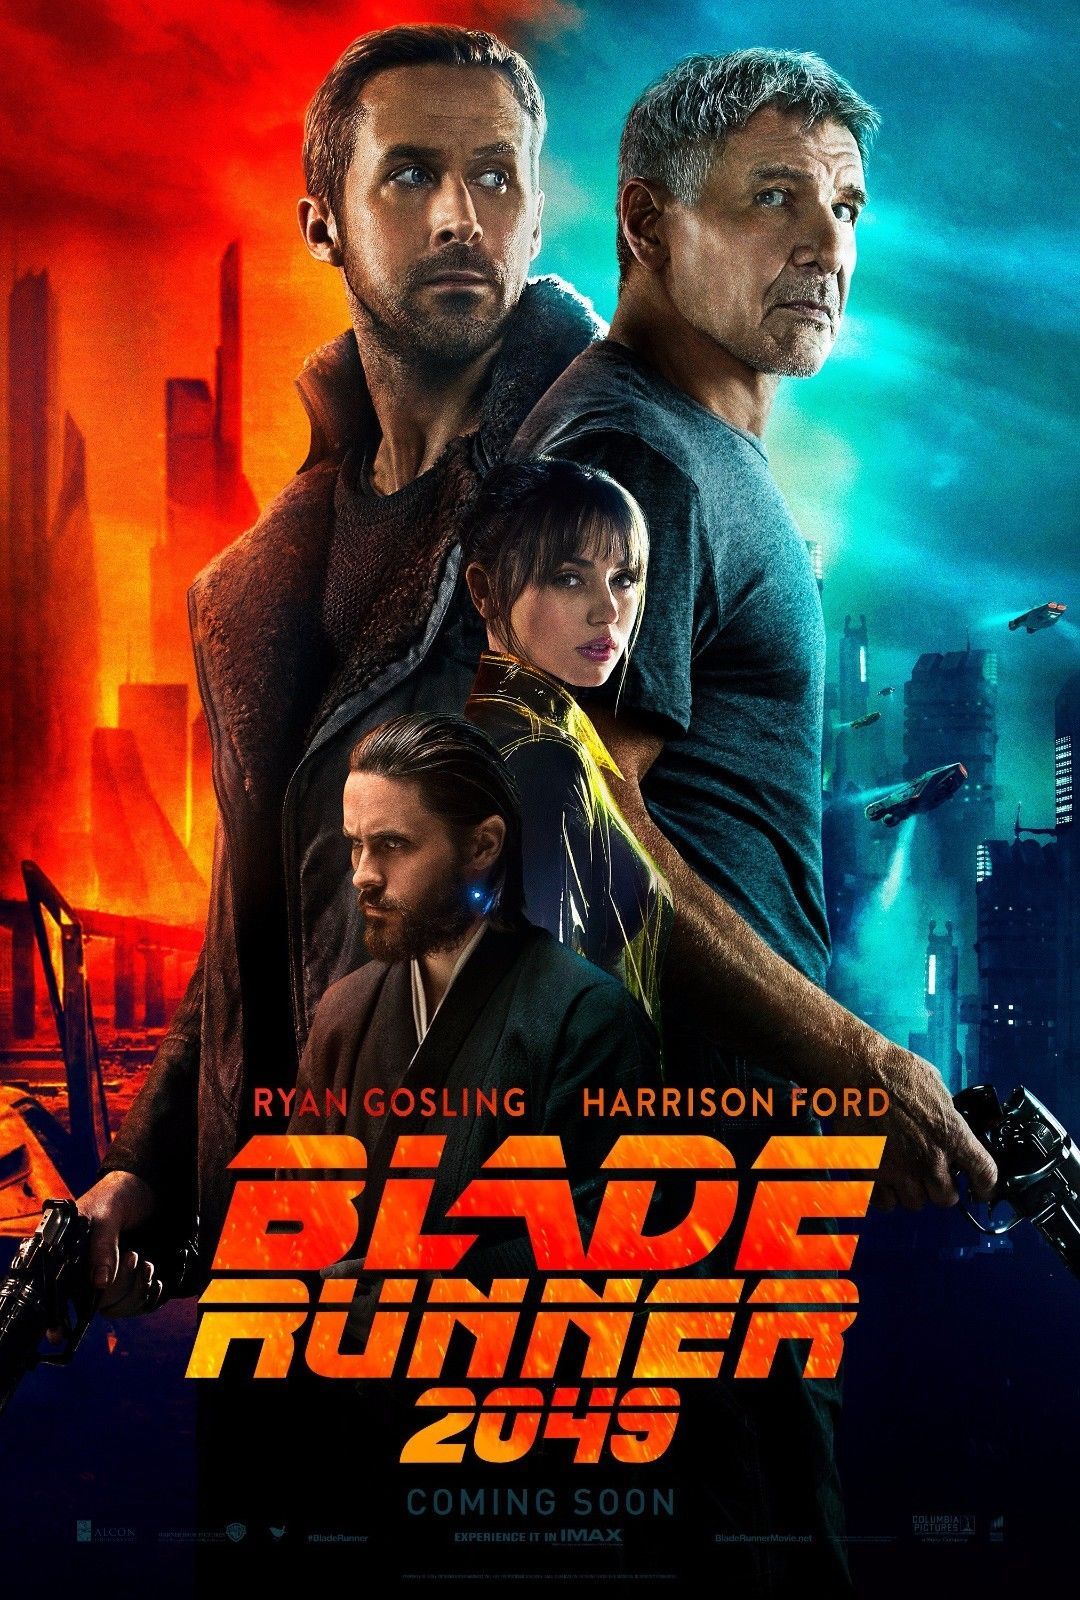 Blade Runner 2049 Movie Art Silk Poster 12x18 24x36 24x43 